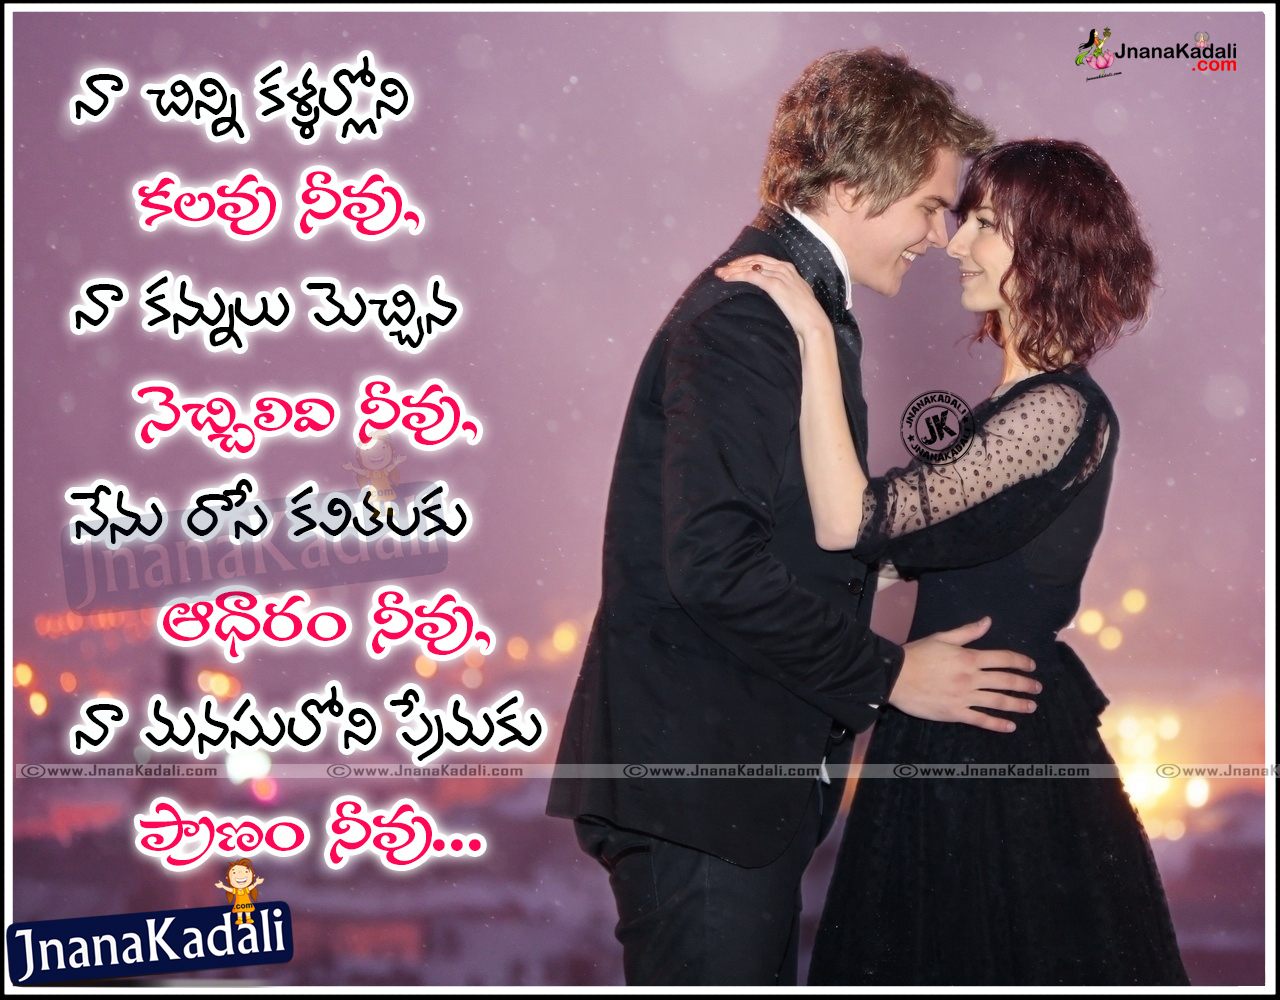 Best Telugu love proposal quotes messages | JNANA KADALI.COM ...